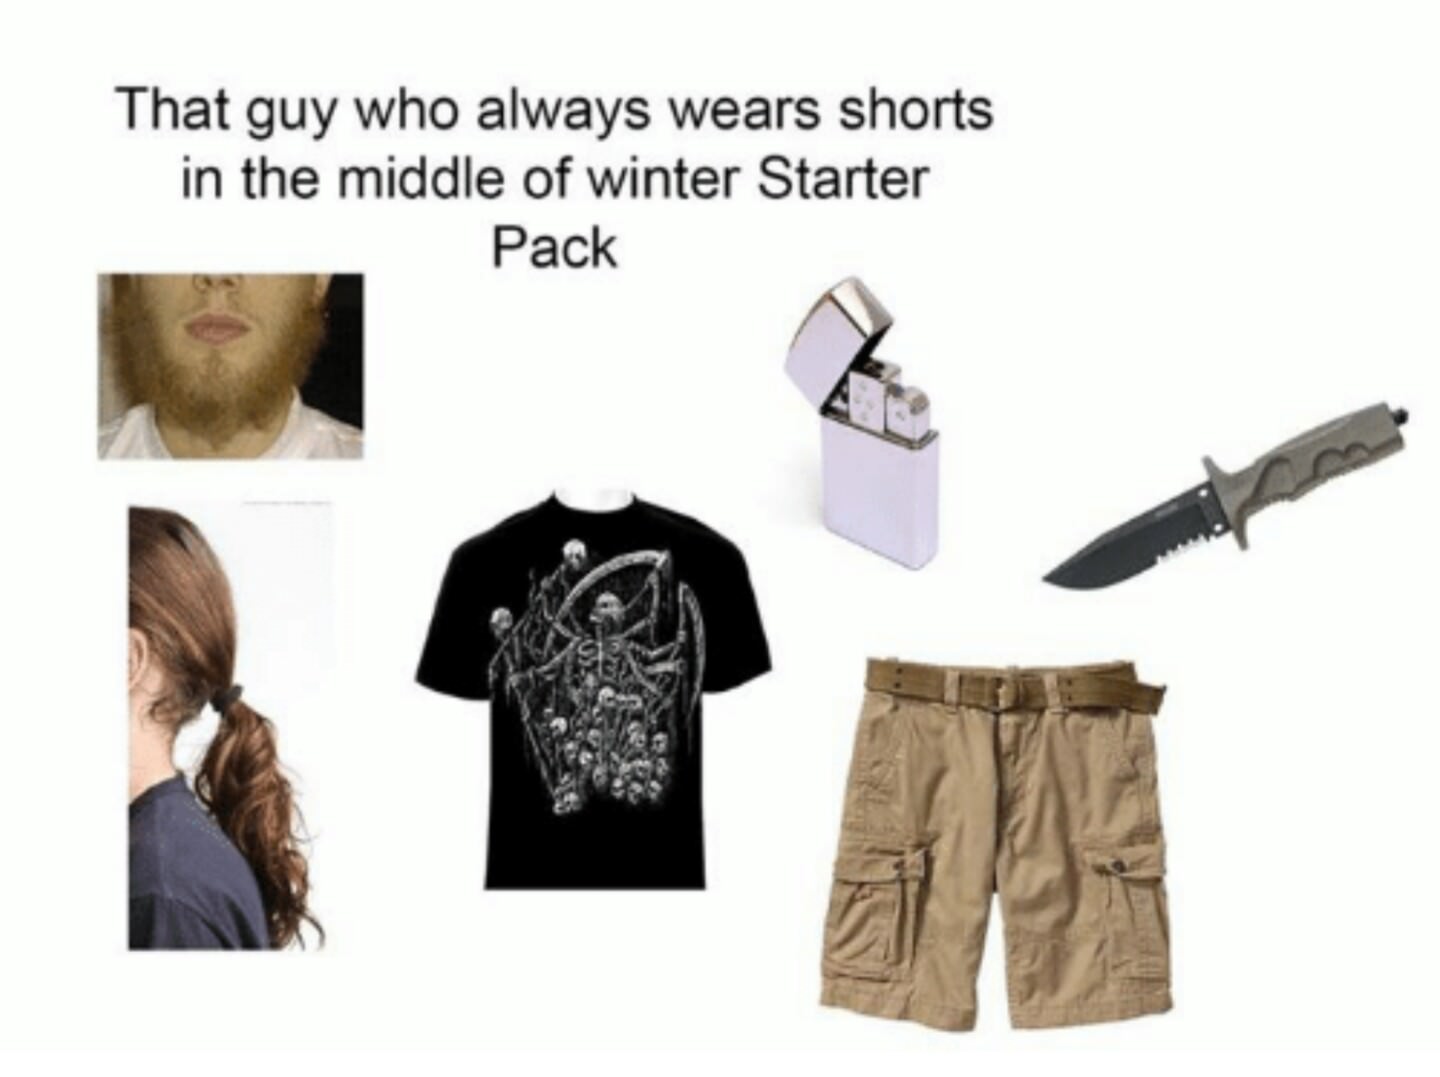 starter pack - guy who always wears shorts - That guy who always wears shorts in the middle of winter Starter Pack